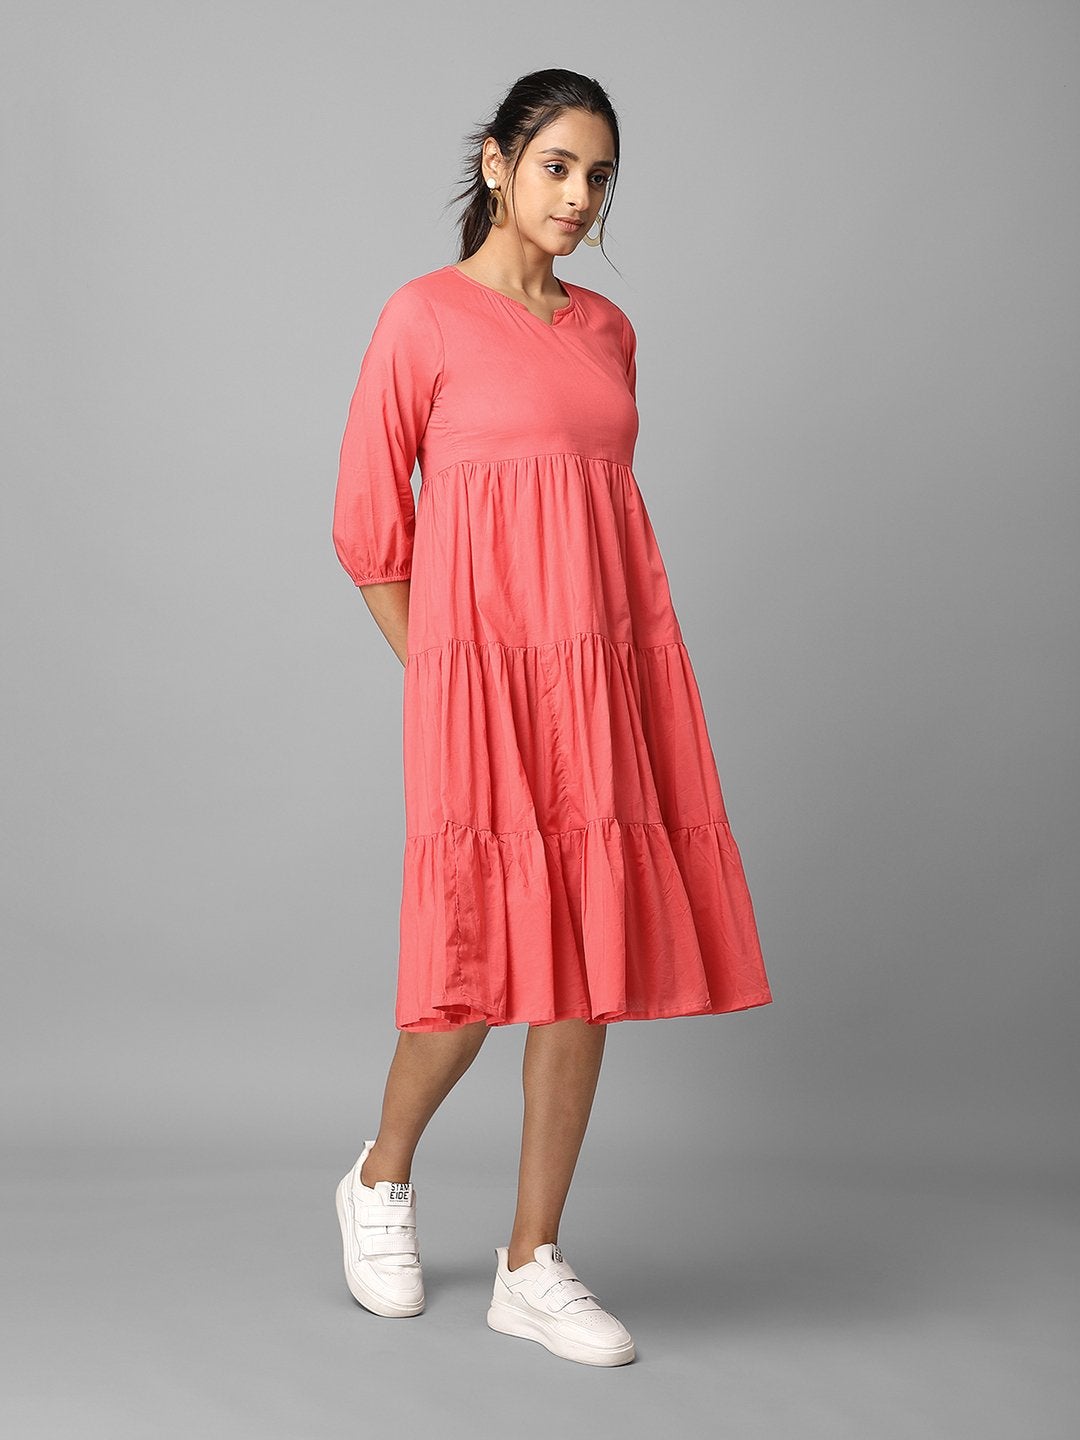 Women's Solid Pink Tiered A-Line Dress - Azira